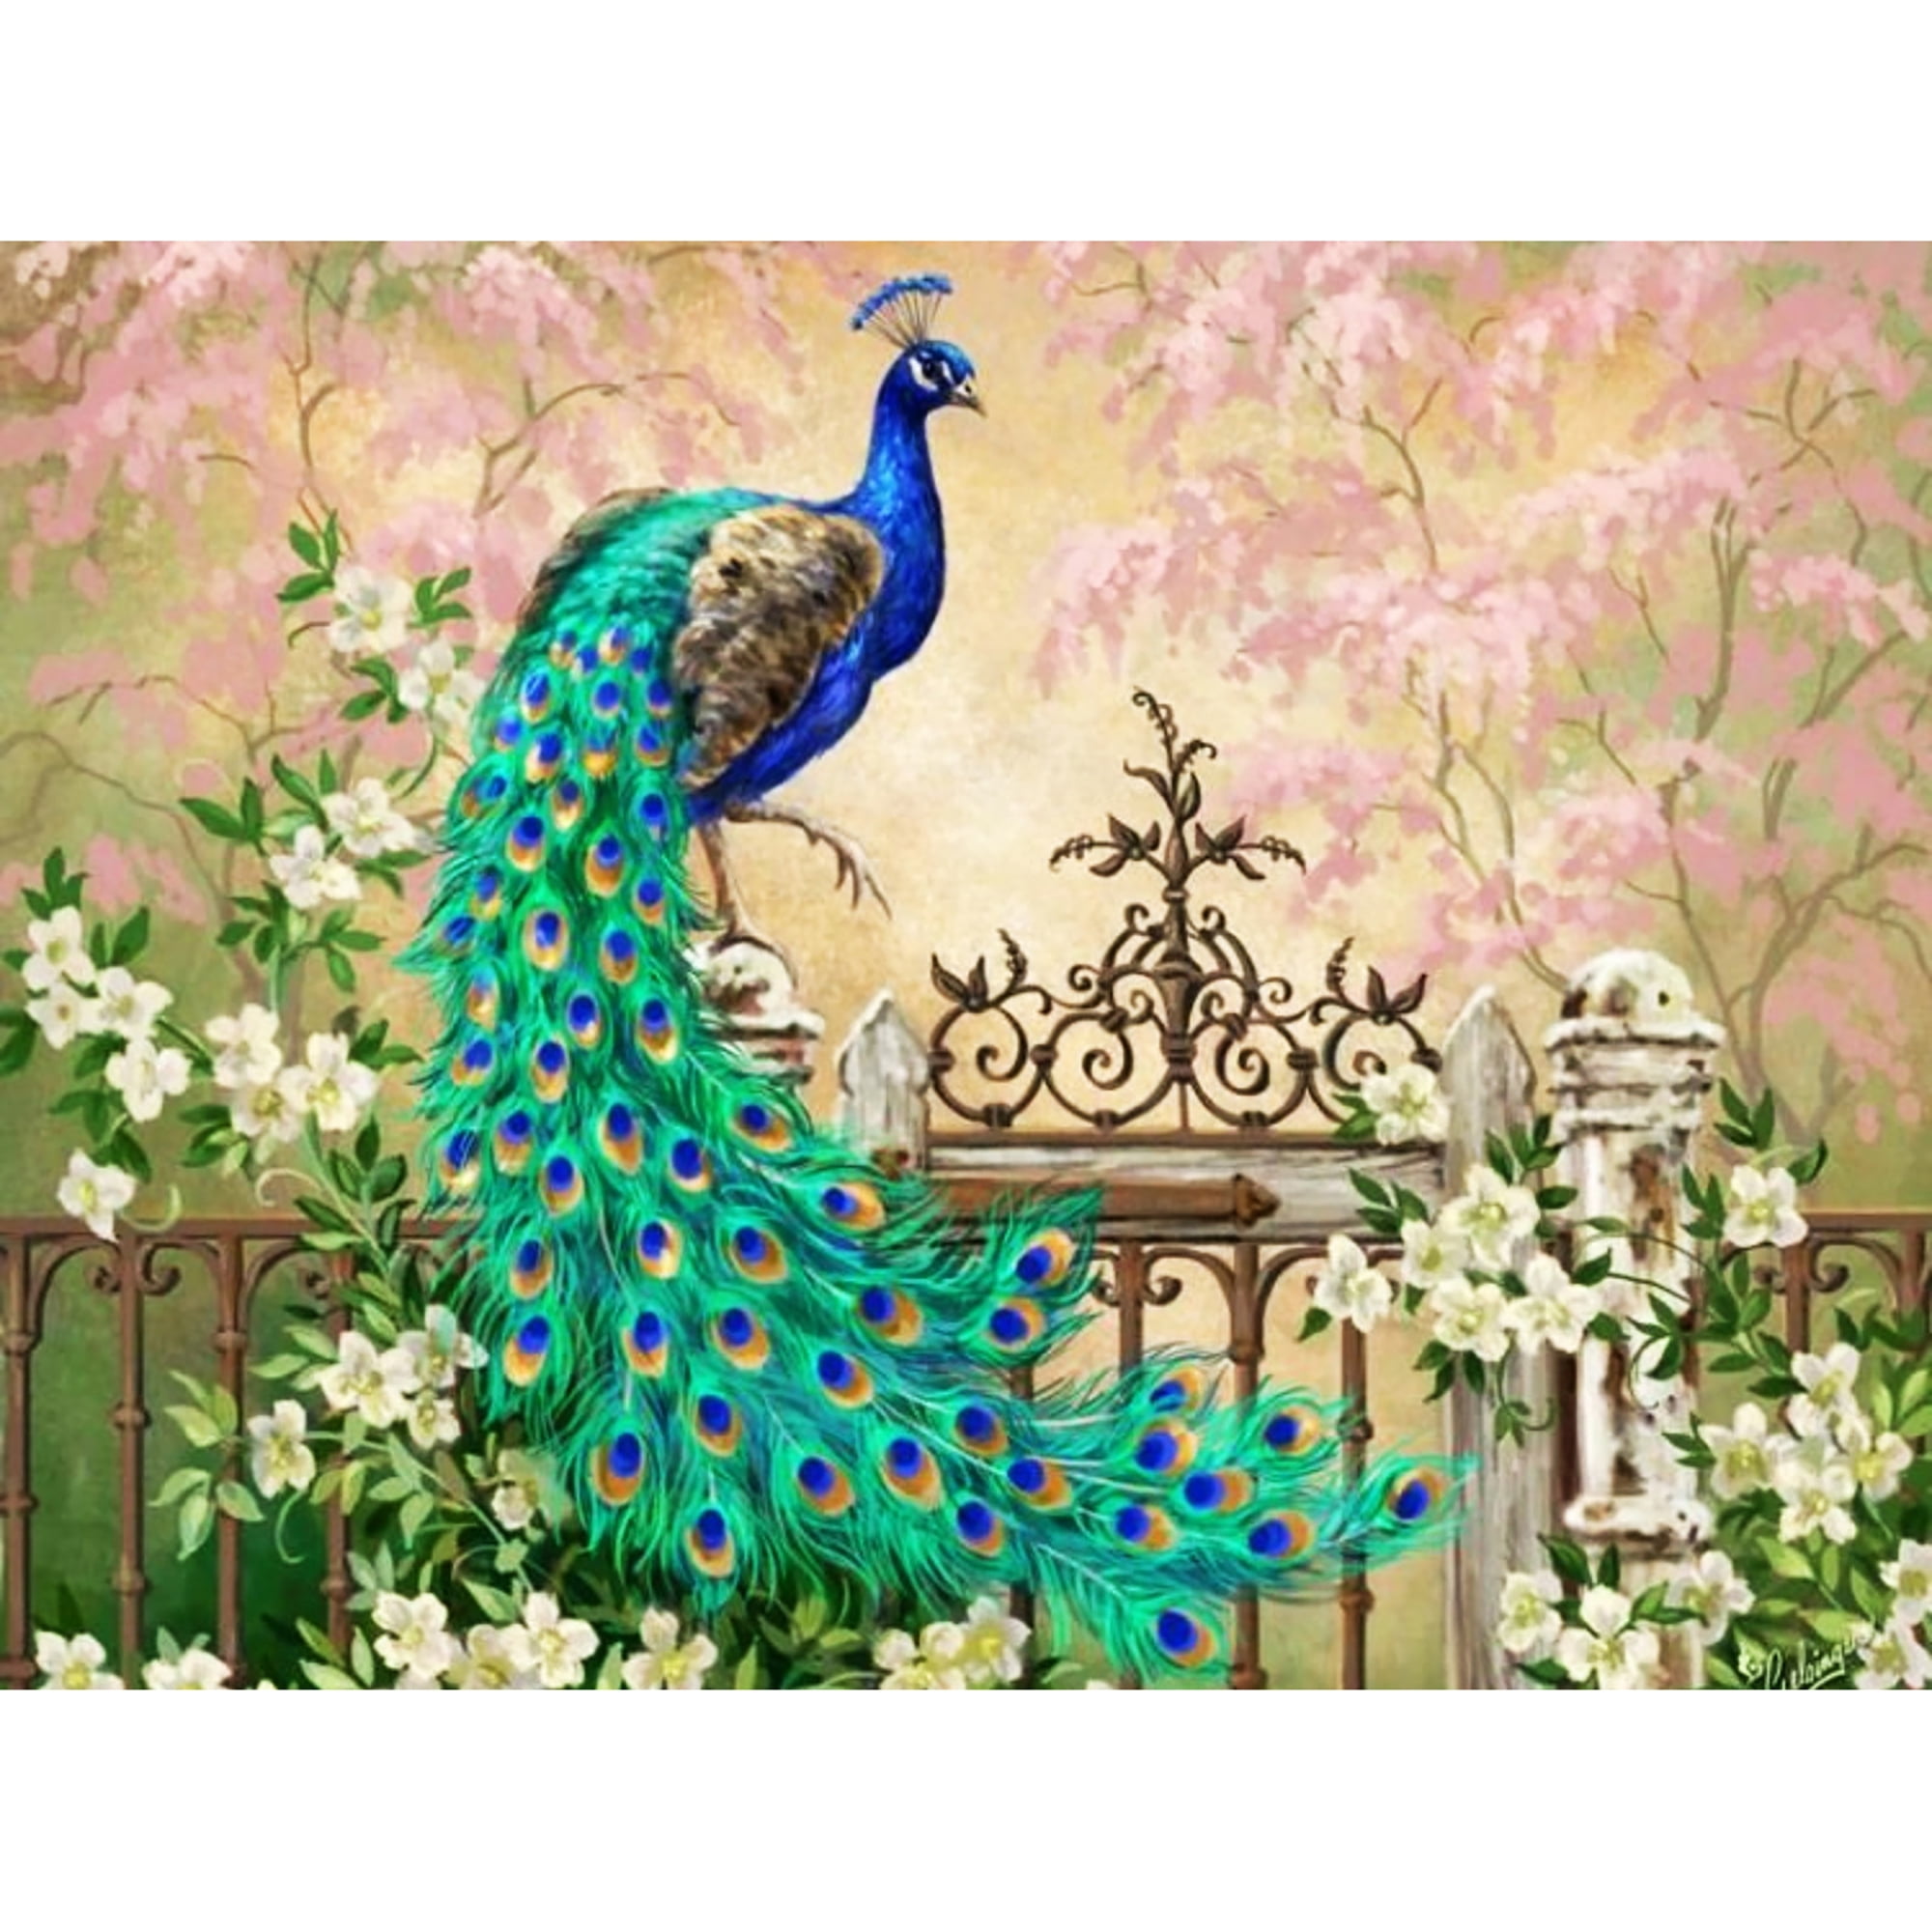 5d Diamond Art Kits for Adults,Peacock Diamond Painting Art Full 